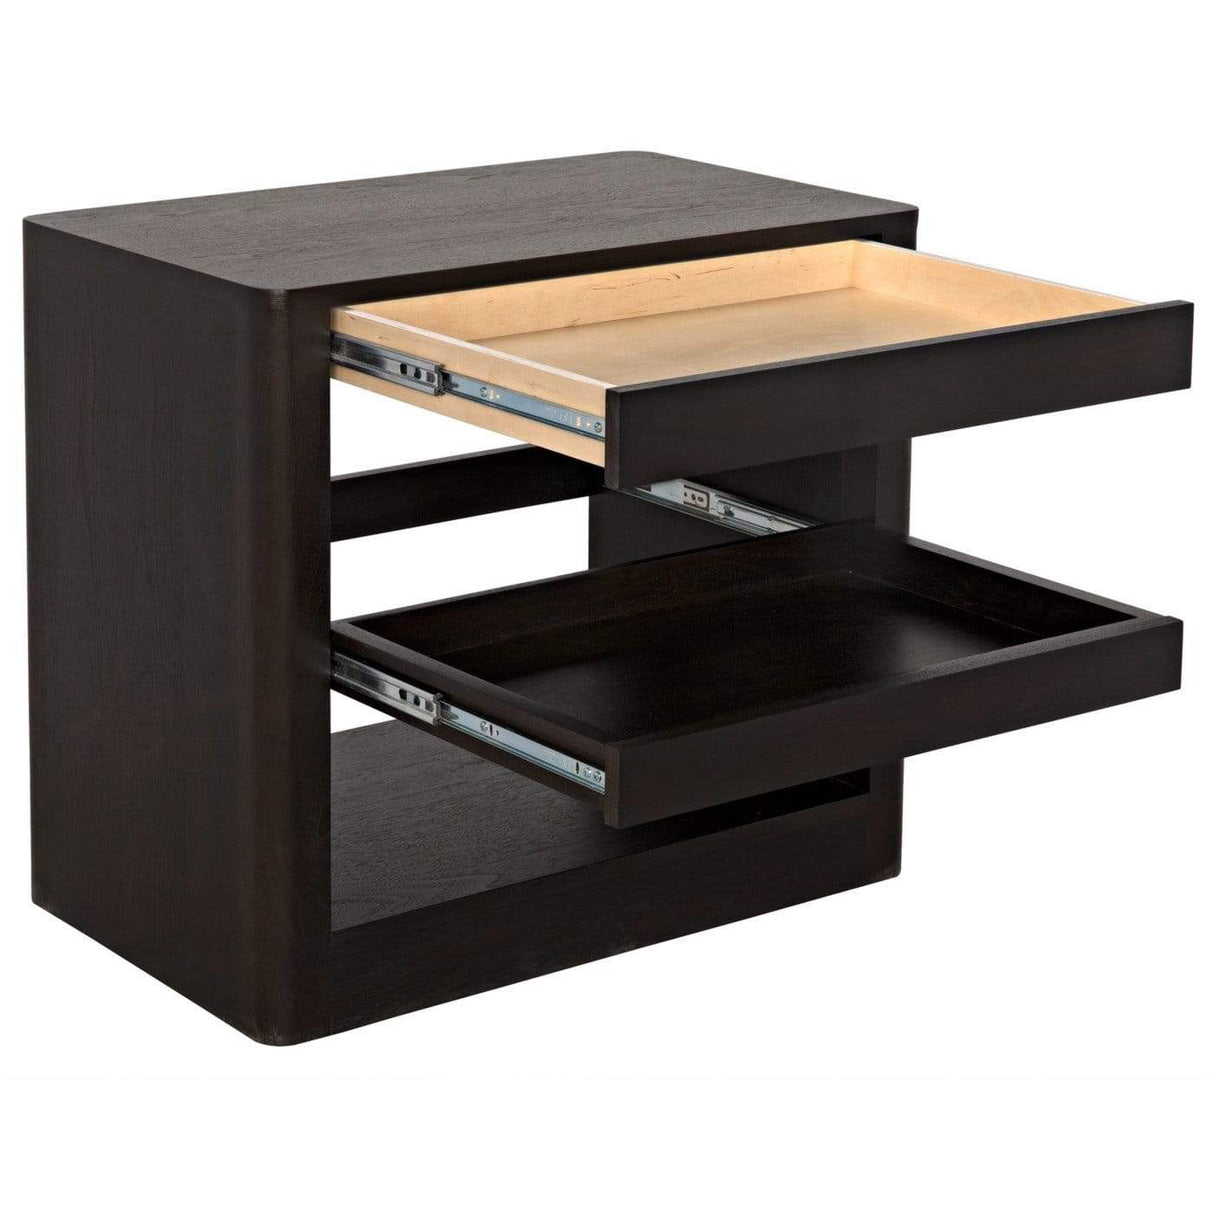 CFC Mayito Side Table - Walnut Furniture cfc-FF182 00818484021943